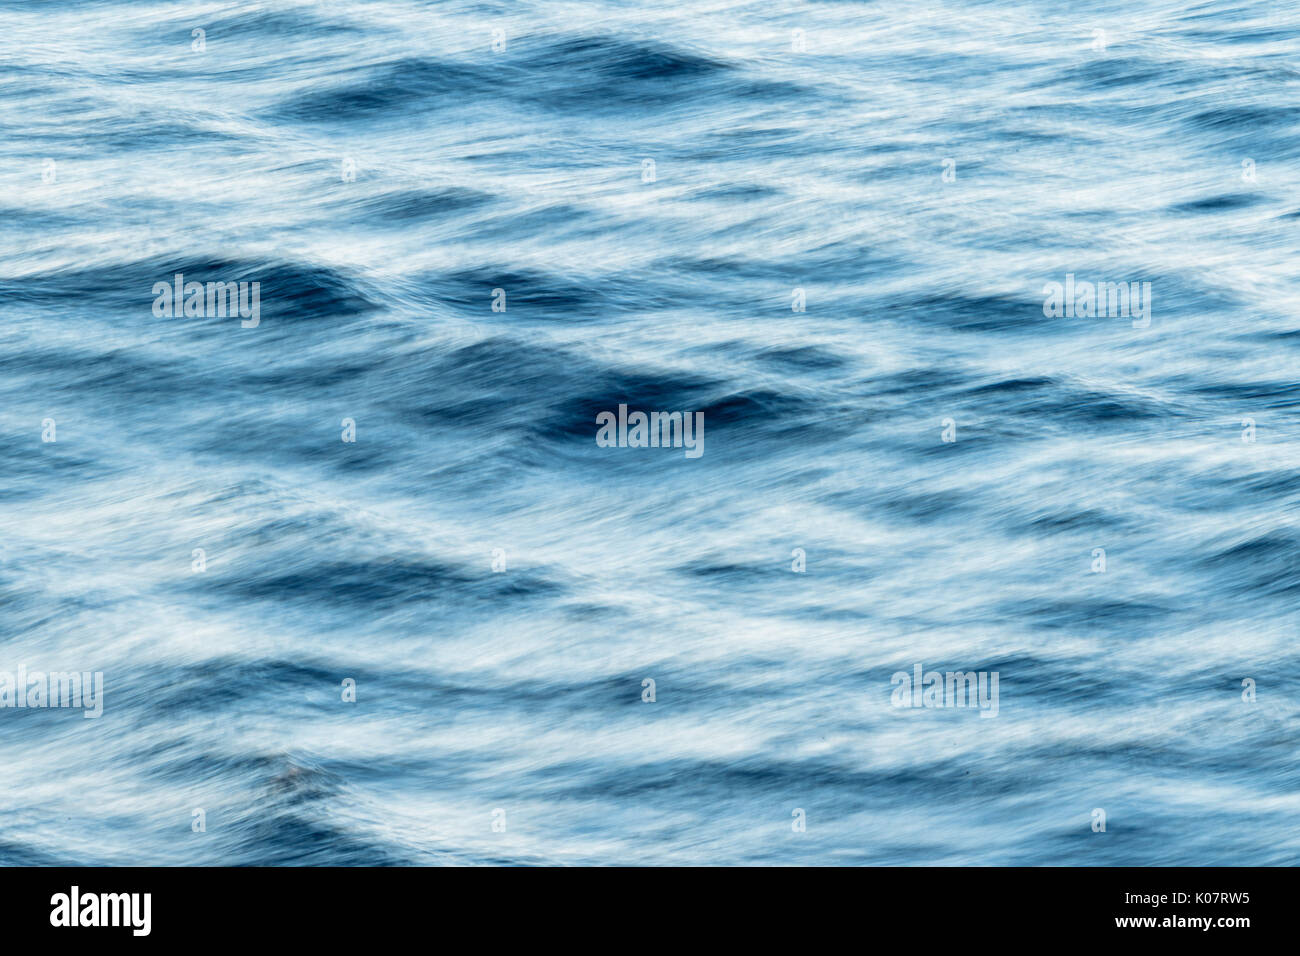 Waves, sea, ocean surface, time exposure, North Sea Stock Photo